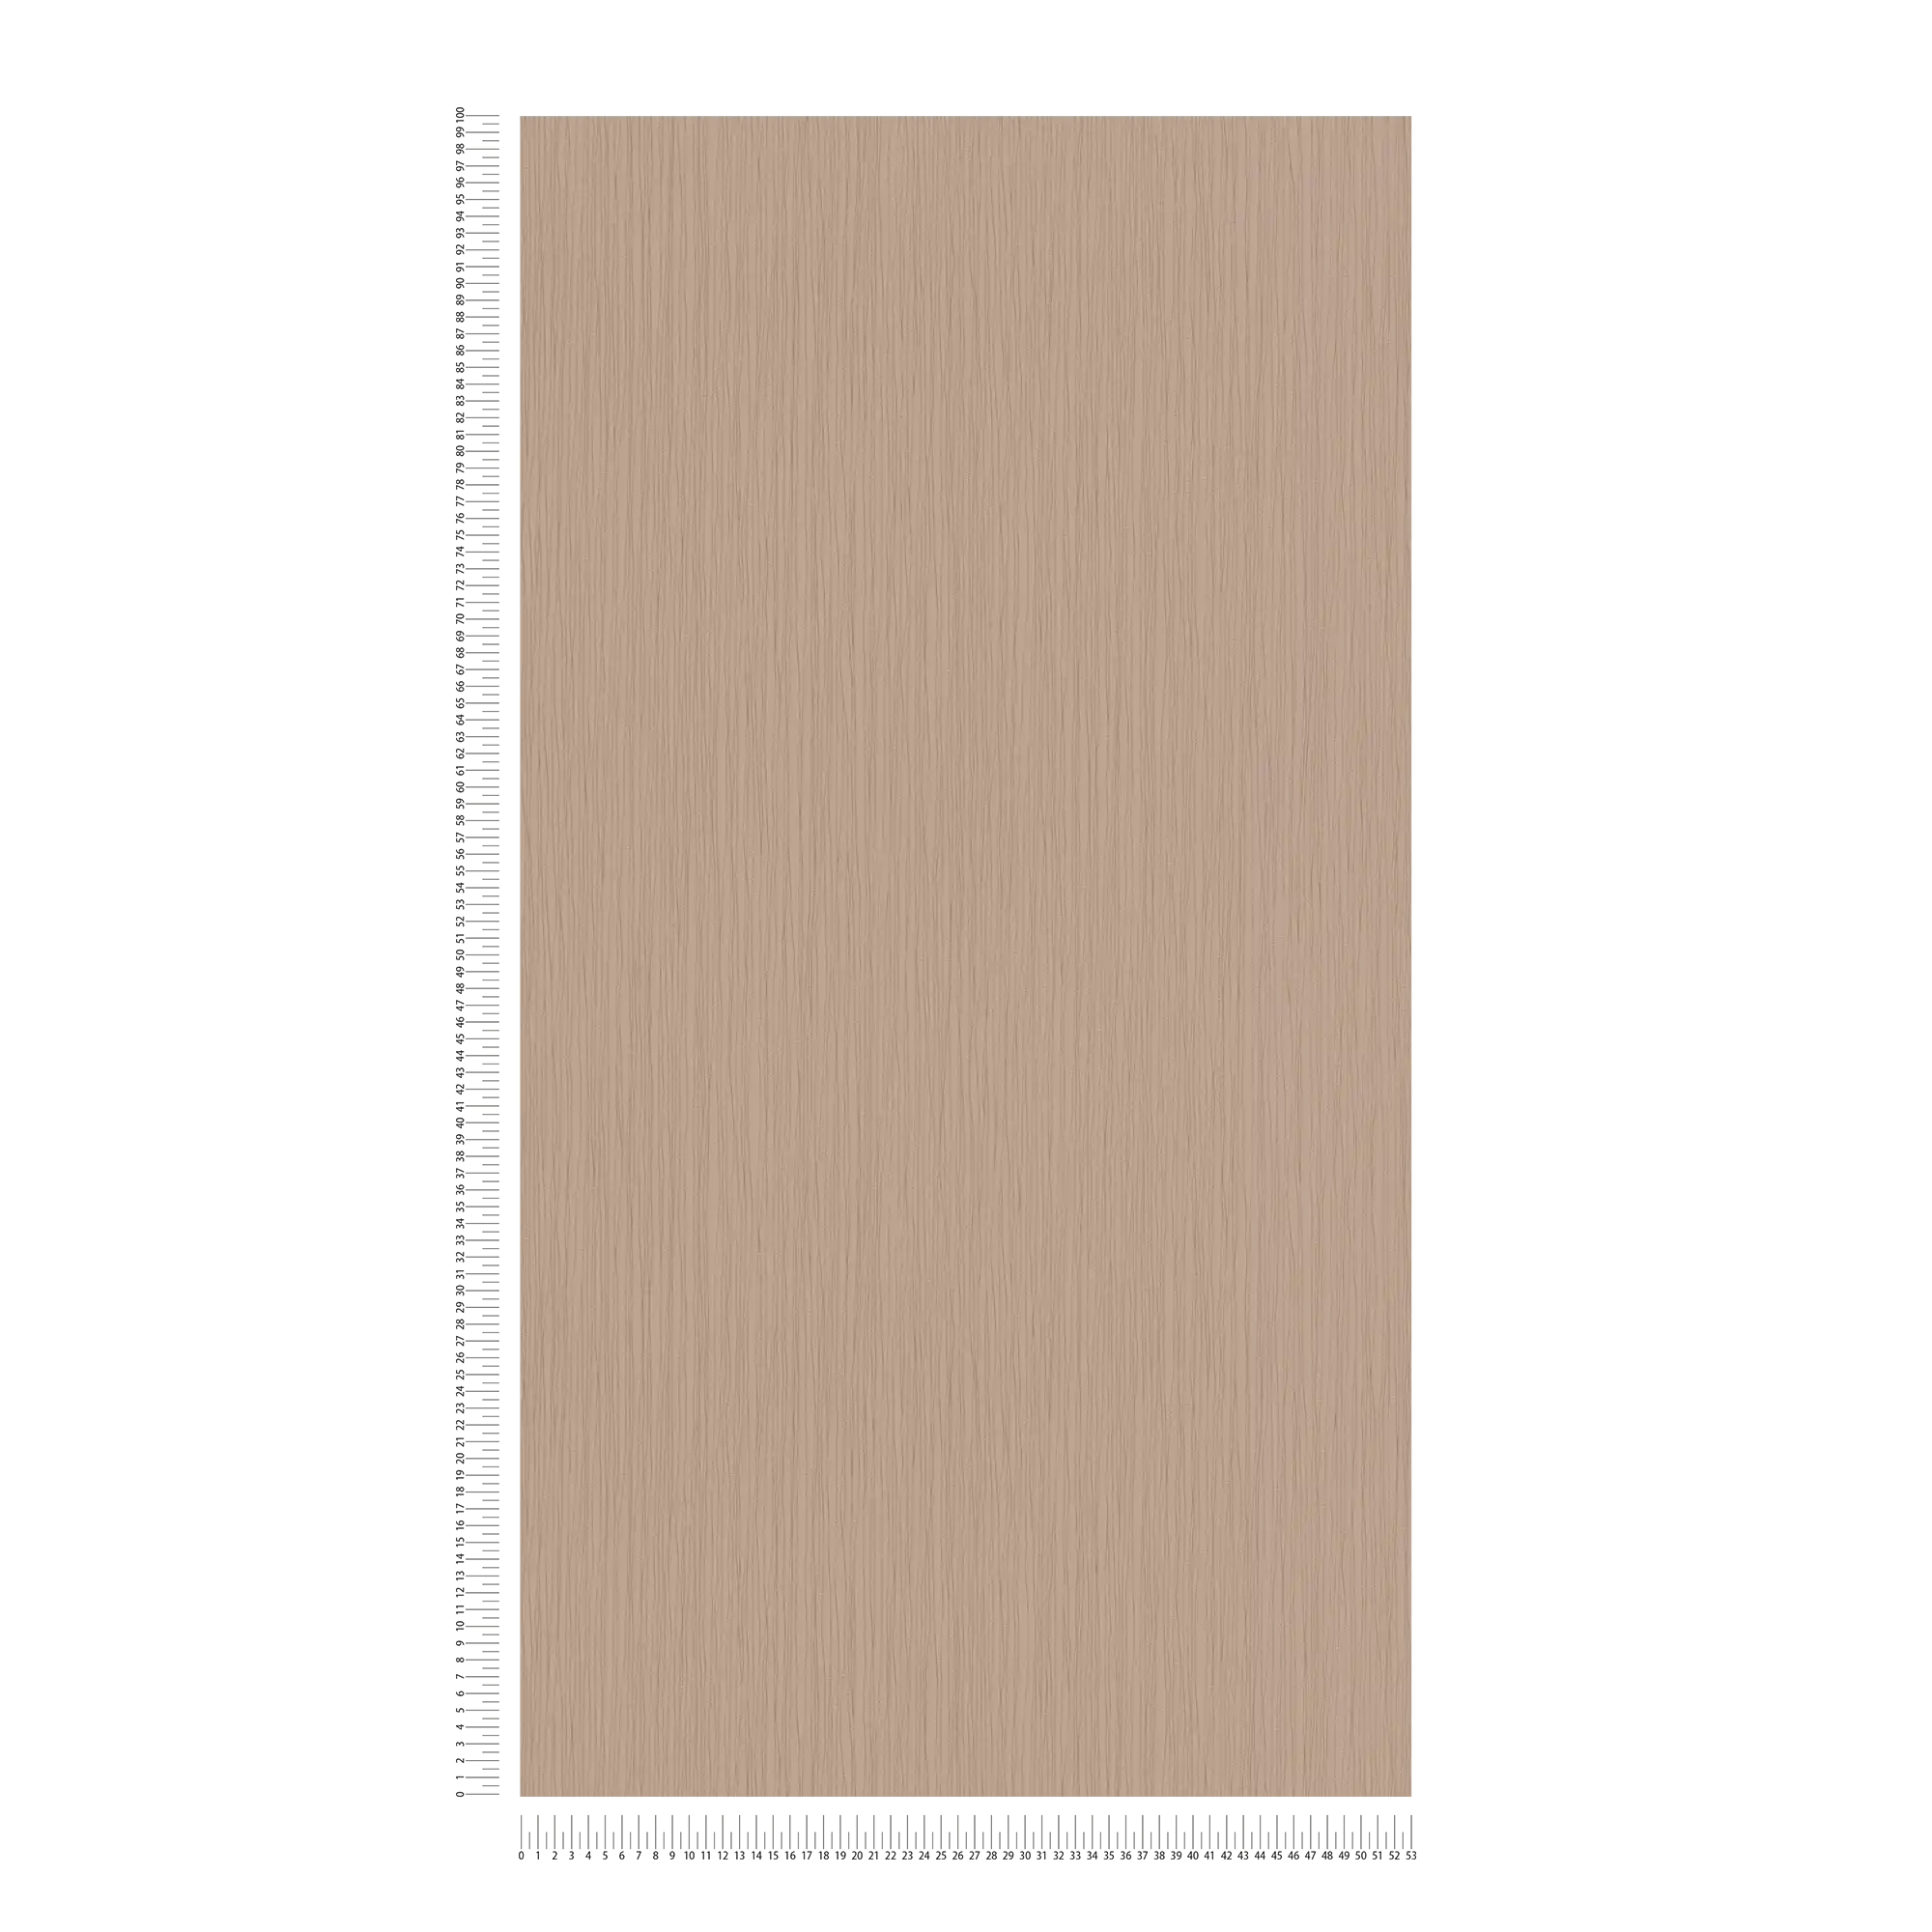             Brown wallpaper with metallic lines & embossed pattern
        